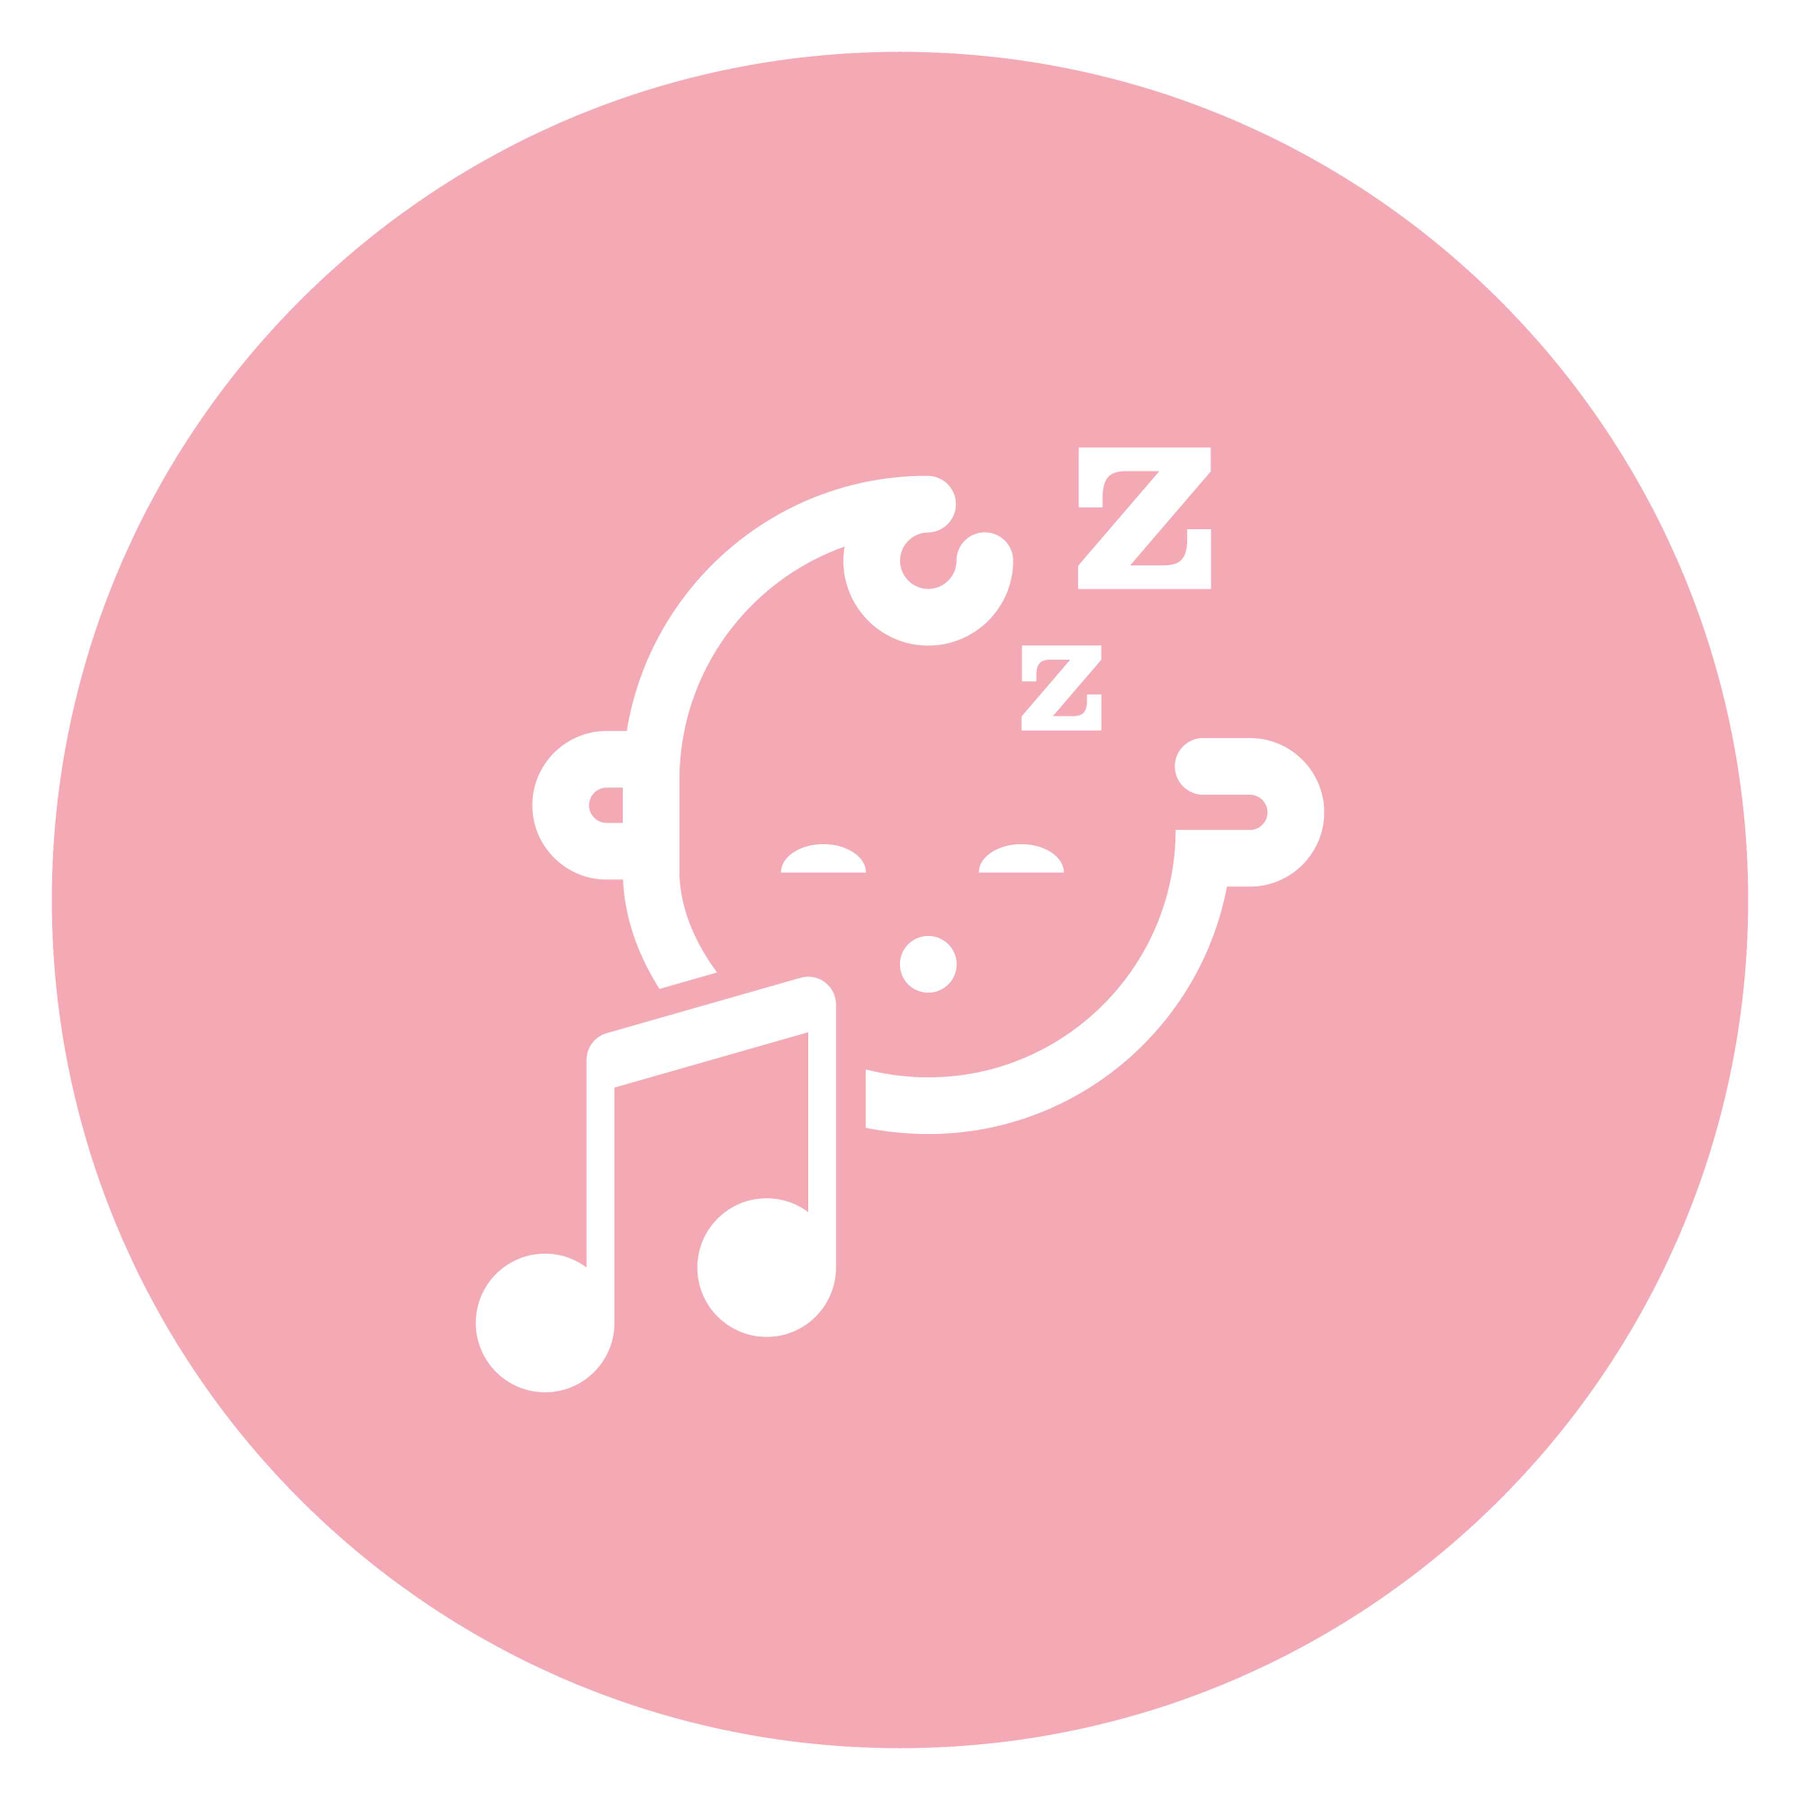 Music box “Schlaf Kindlein schlaf”